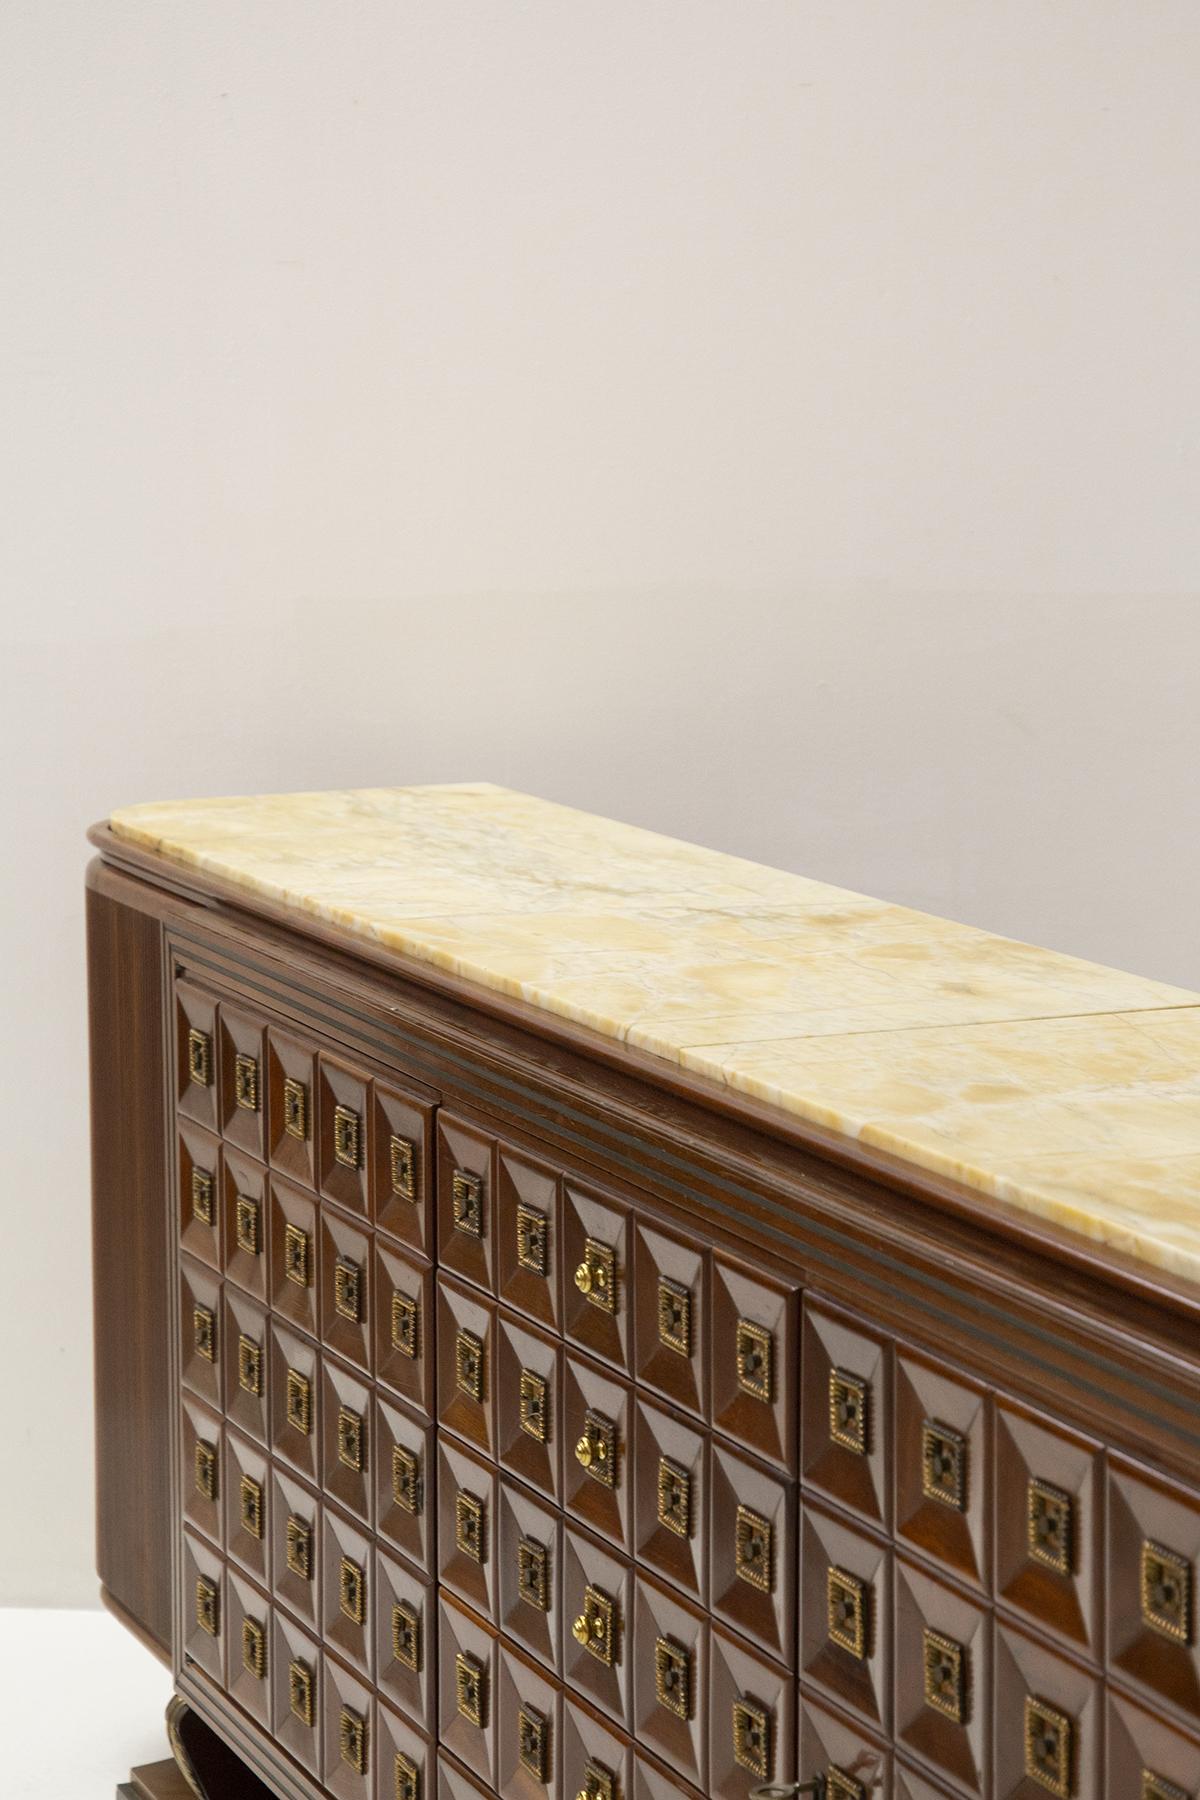 Gino Rancati Rare Wood and Marble Sideboard, Published 2